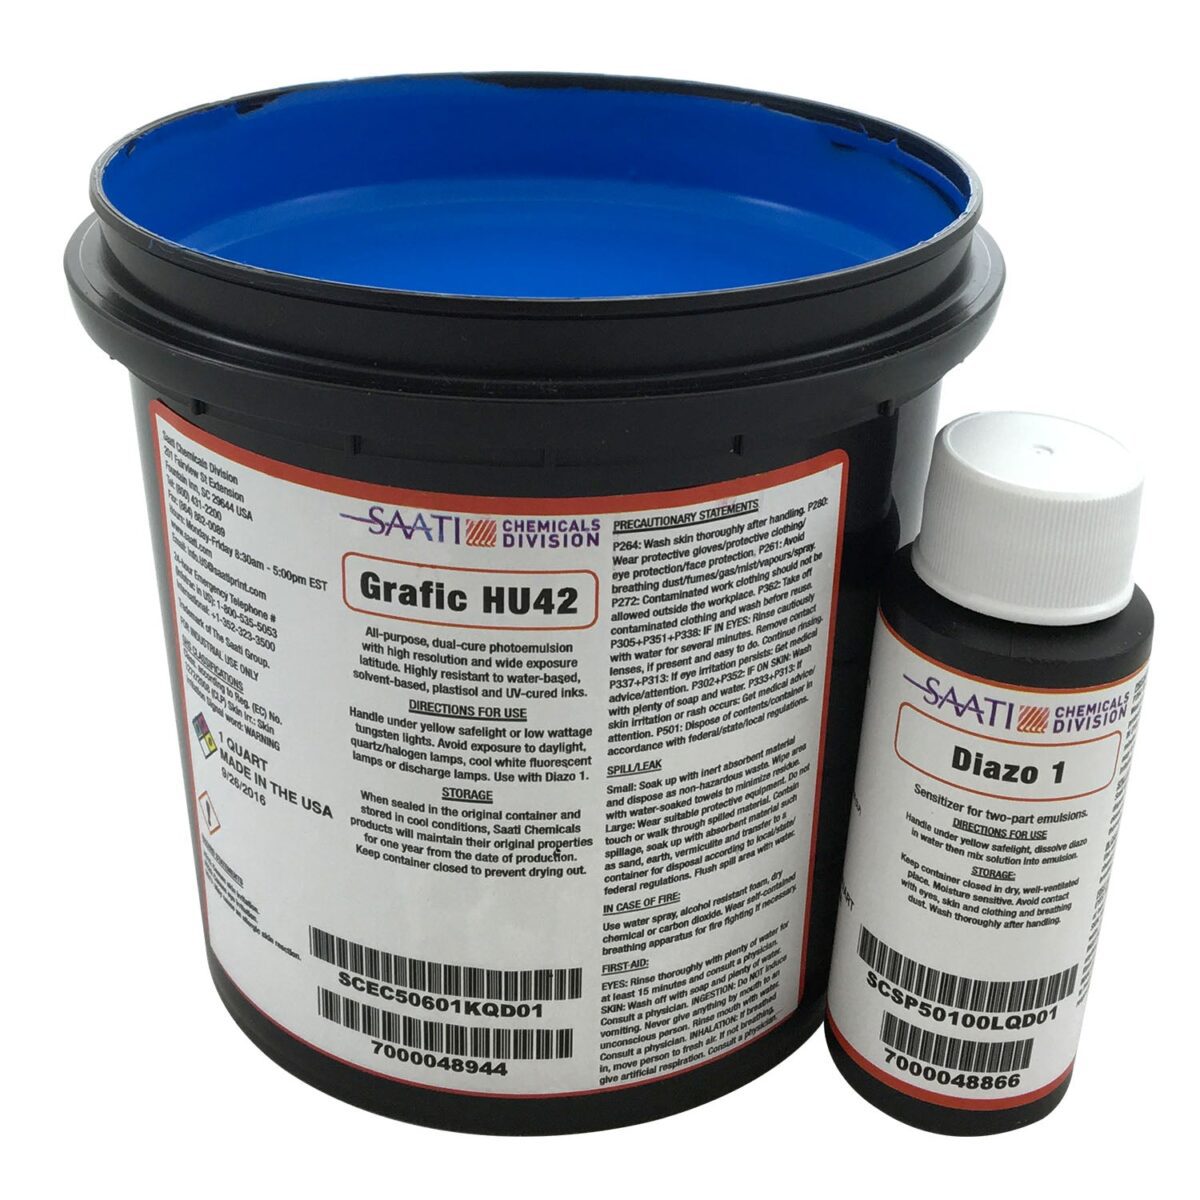 Saati HU42 Graphic + Diazo 1 Emulsion (Blue Color) SAATI®